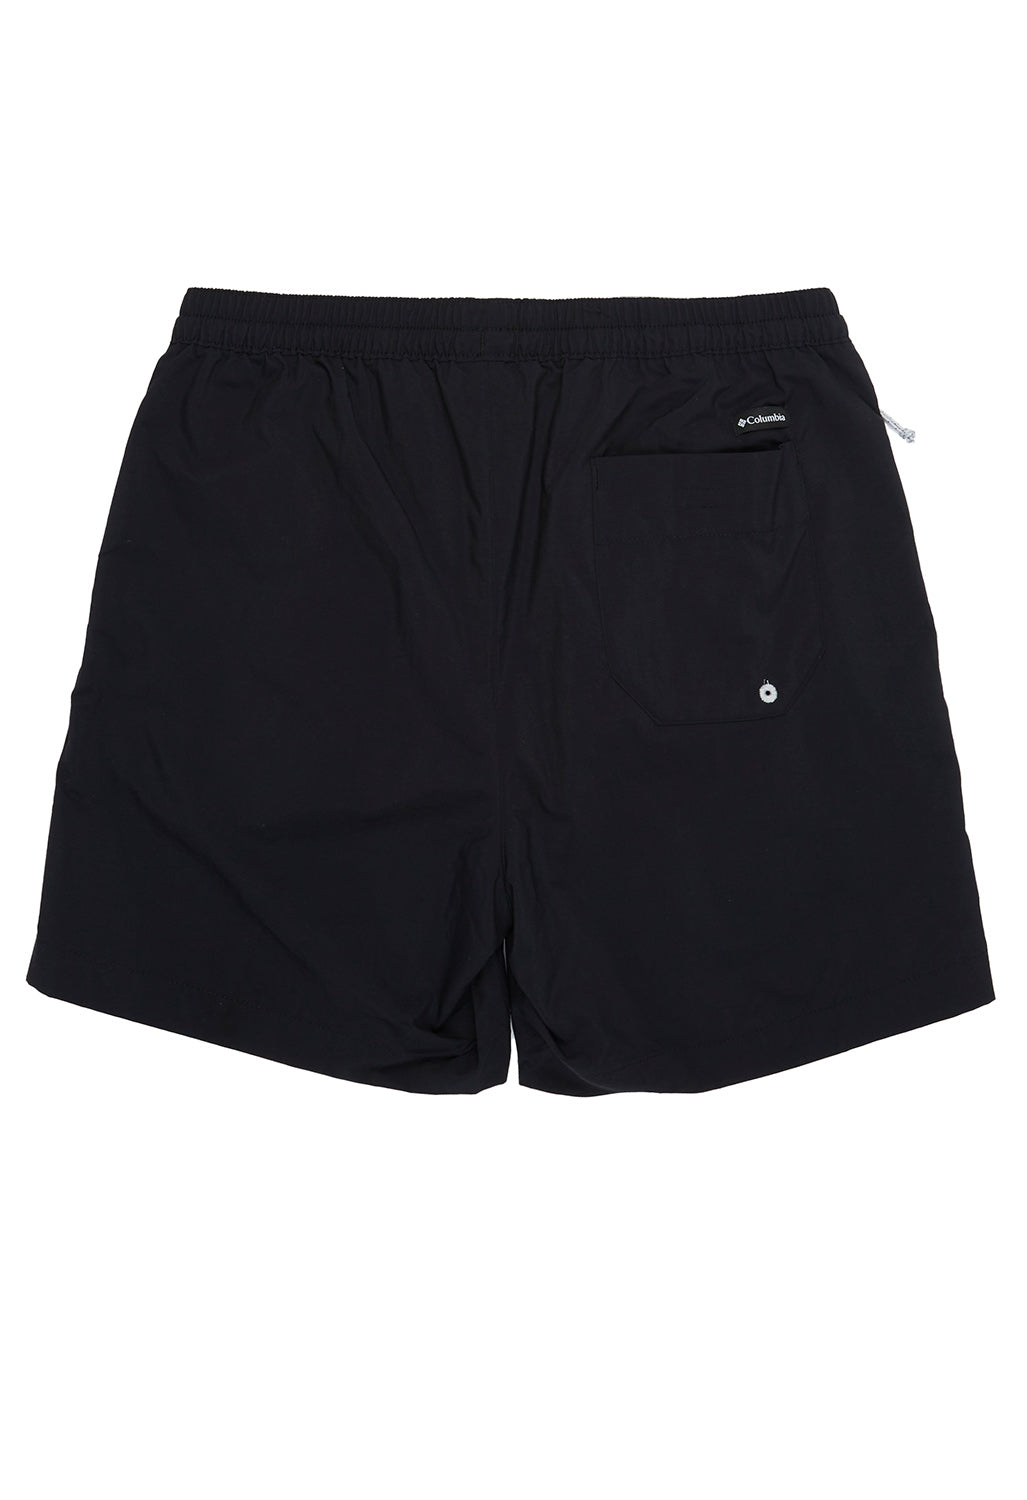 Columbia Men's Summerdry Shorts - Black